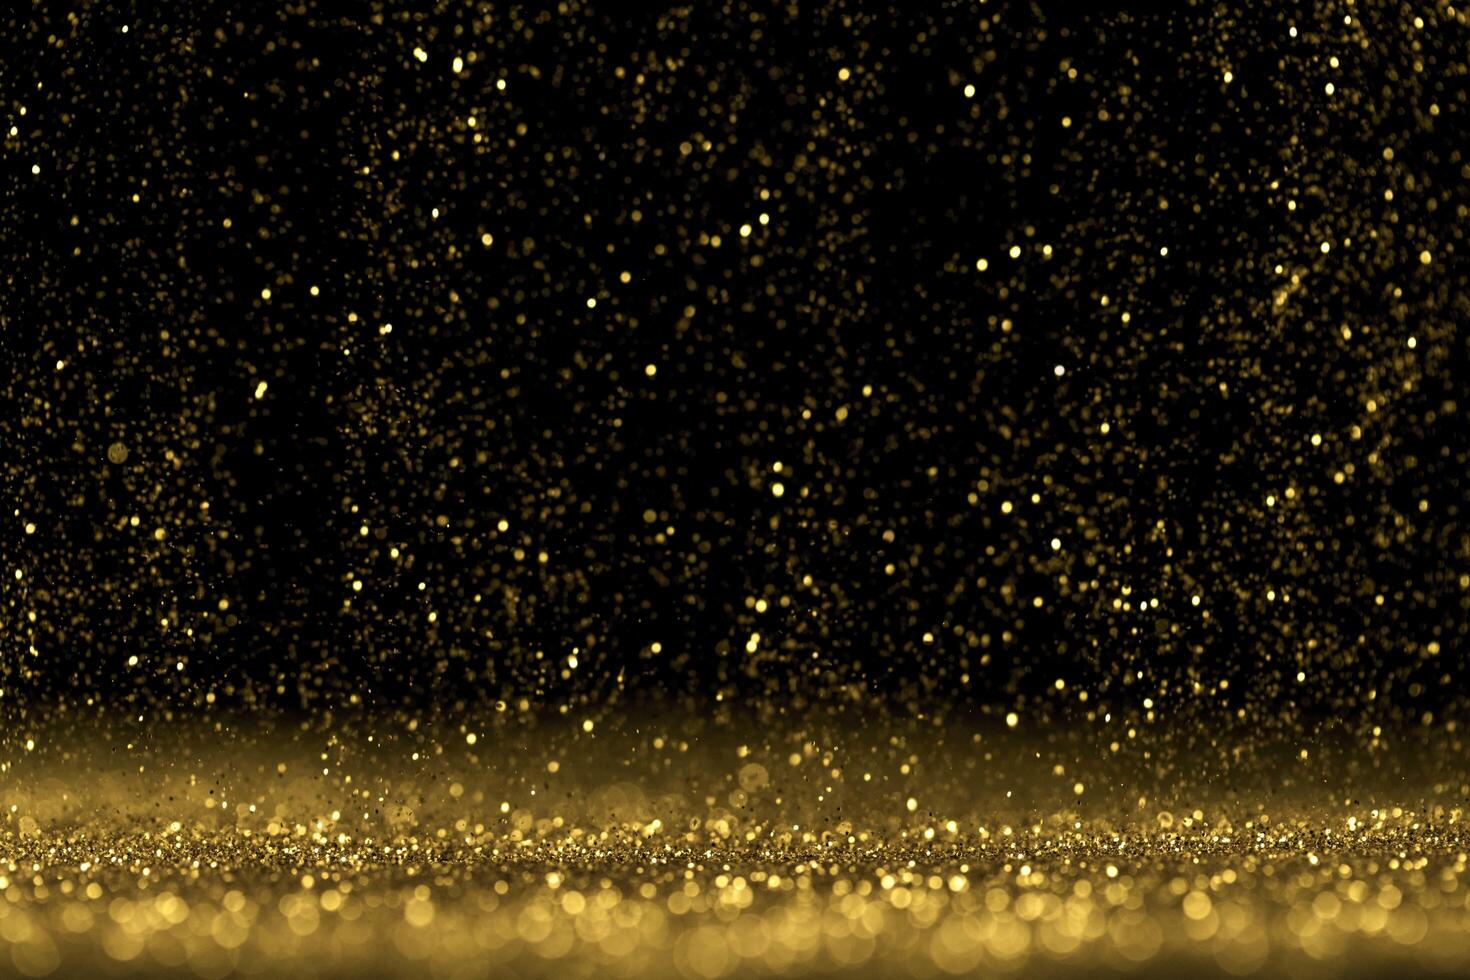 waterfalls golden glitter sparkle-bubbles champagne particles stars black background. Pro jpg photo